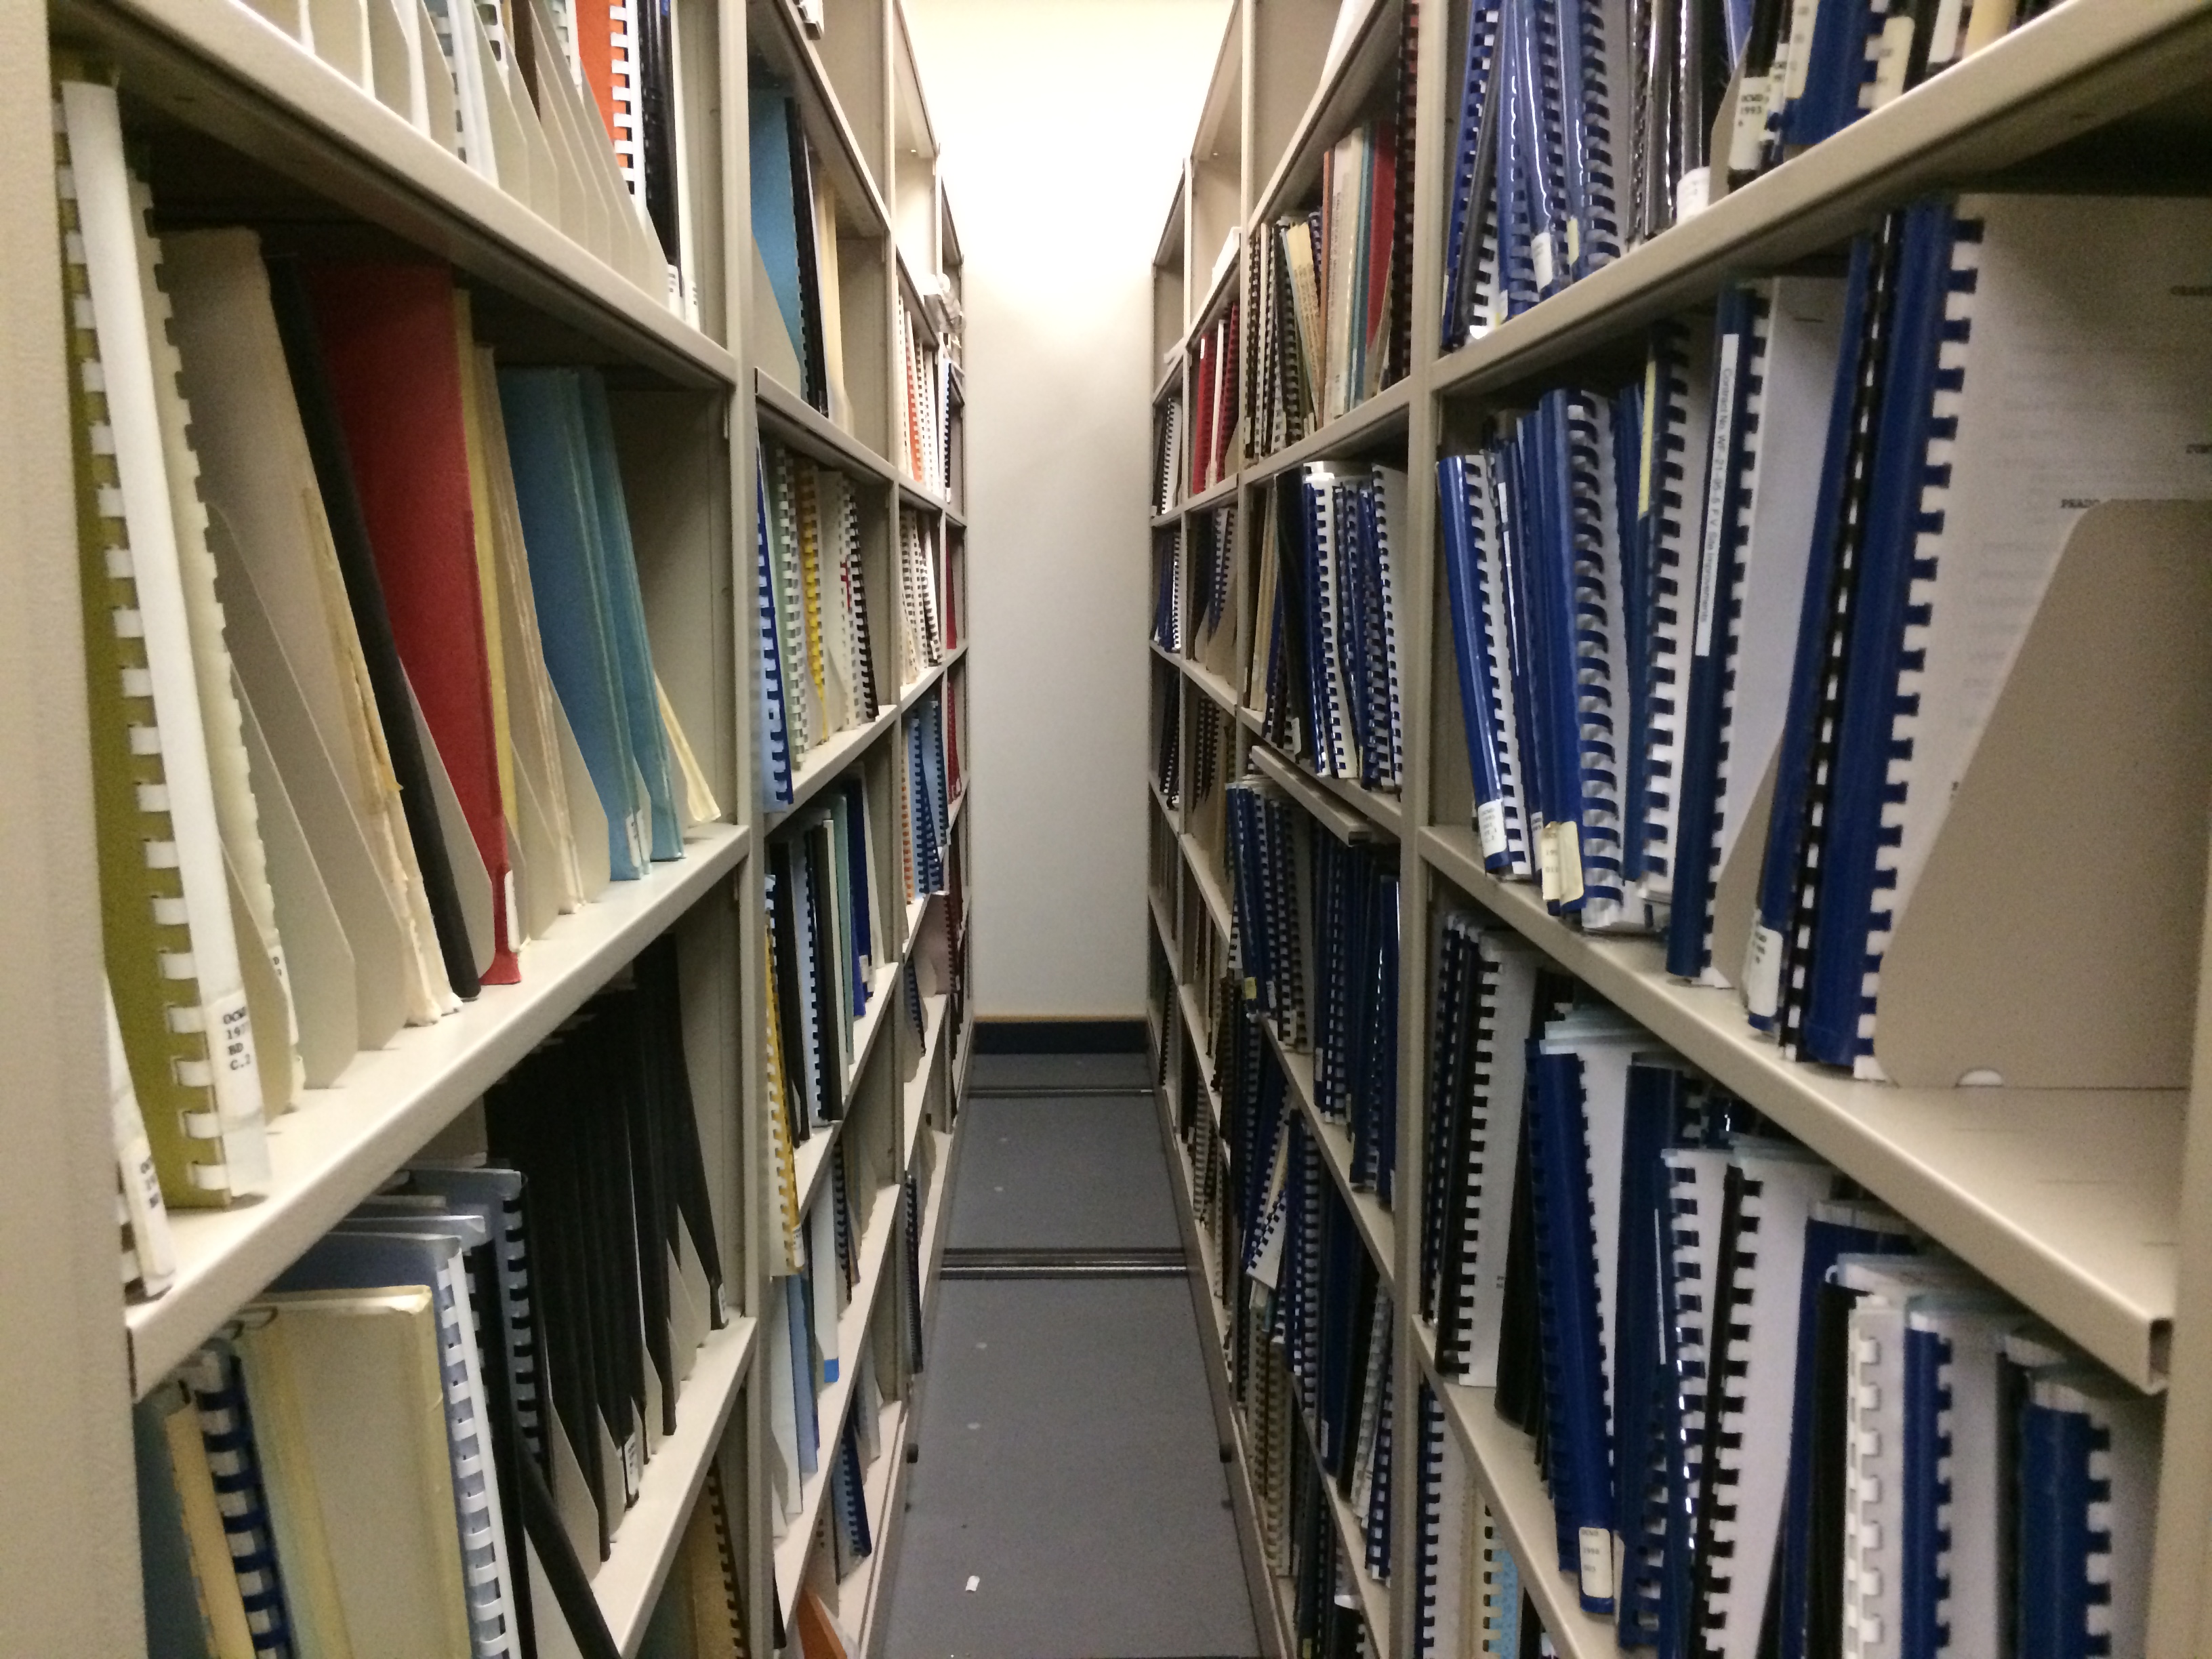 public records on shelves